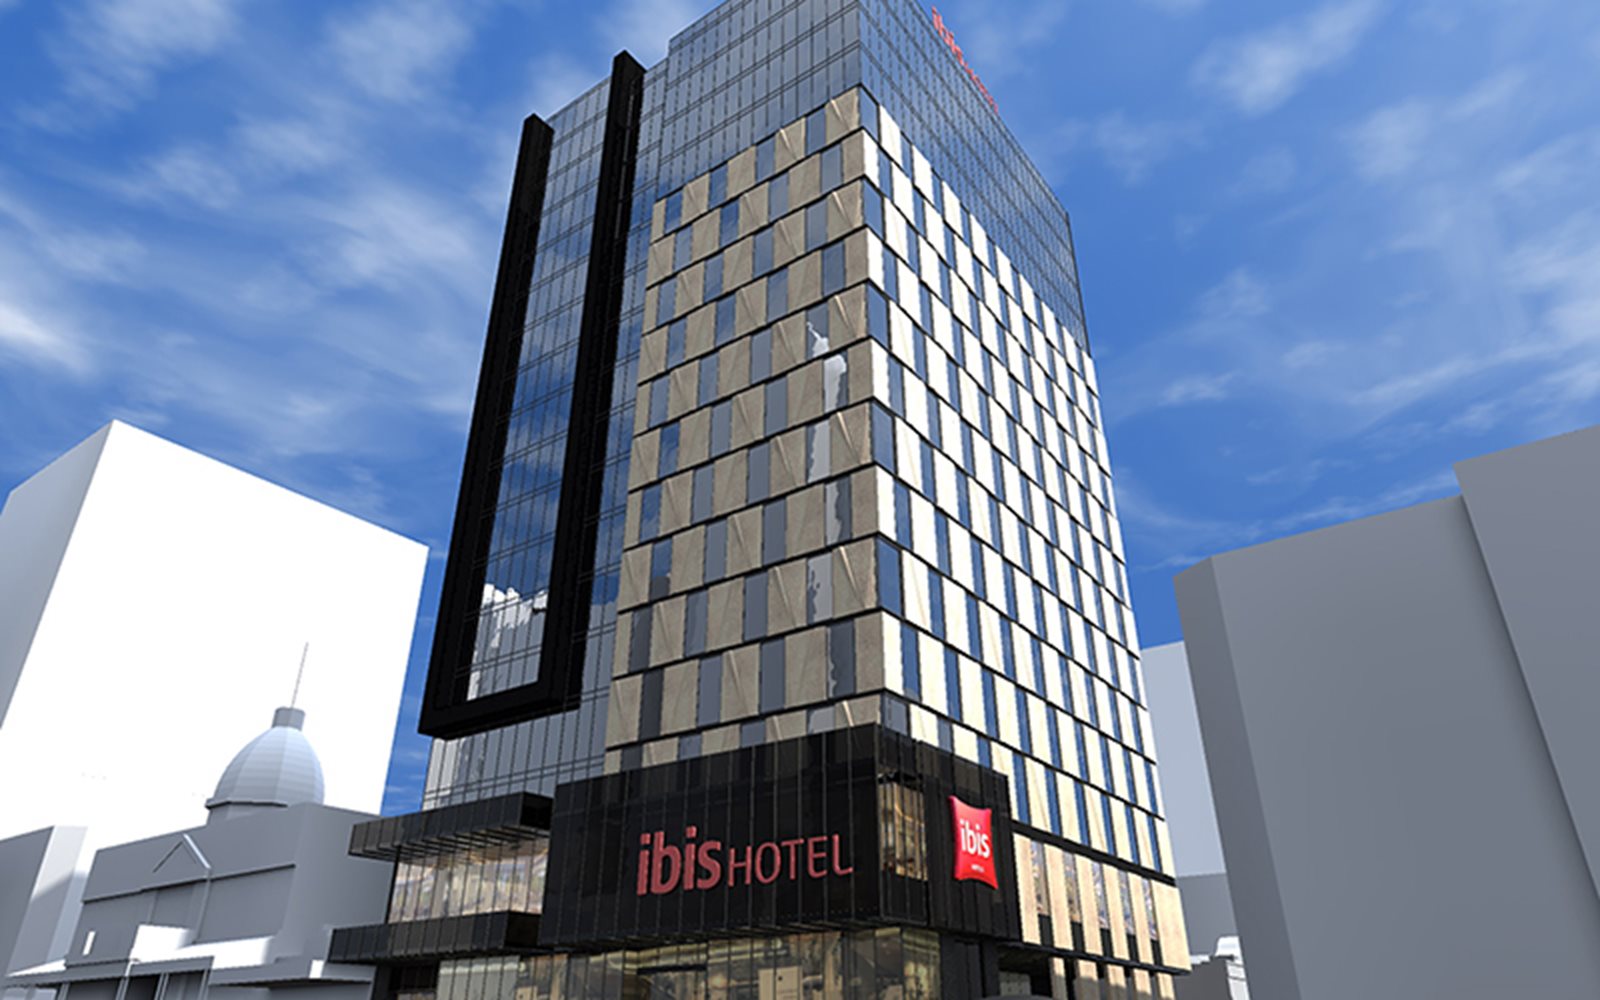 Ibis Hotel, Adelaide